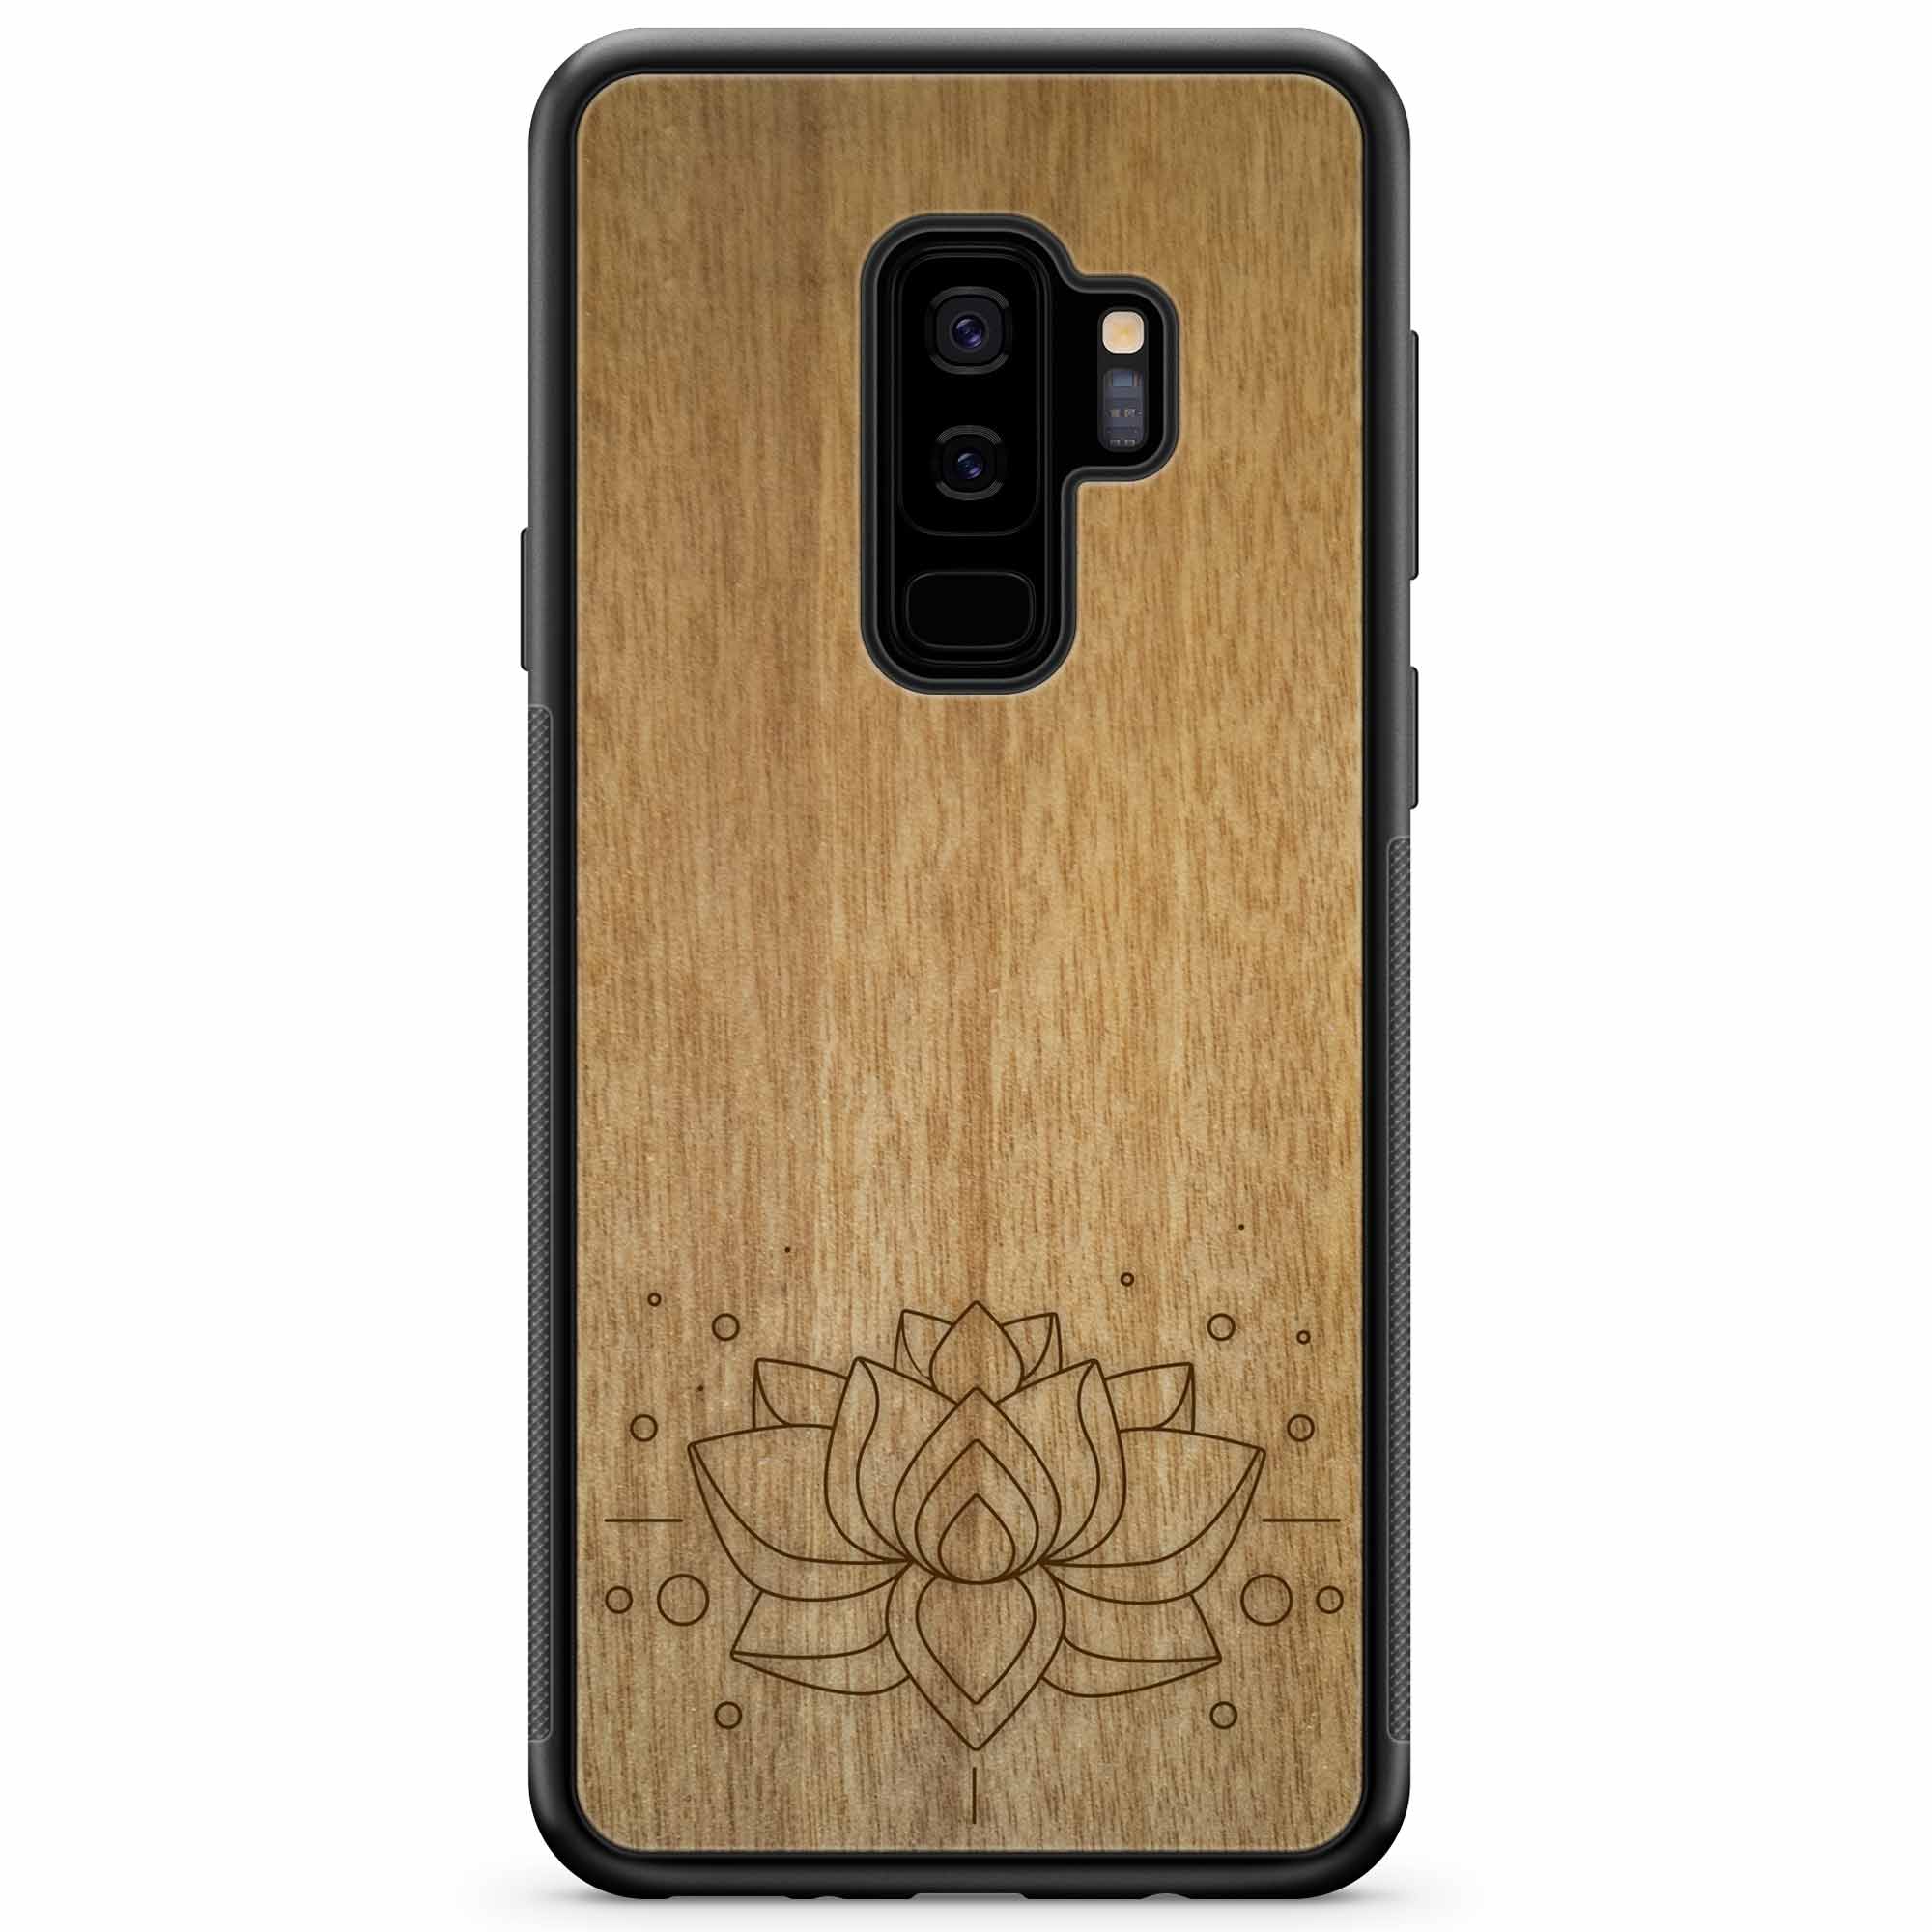 Carcasa de madera para teléfono con grabado Lotus Samsung S9 Plus